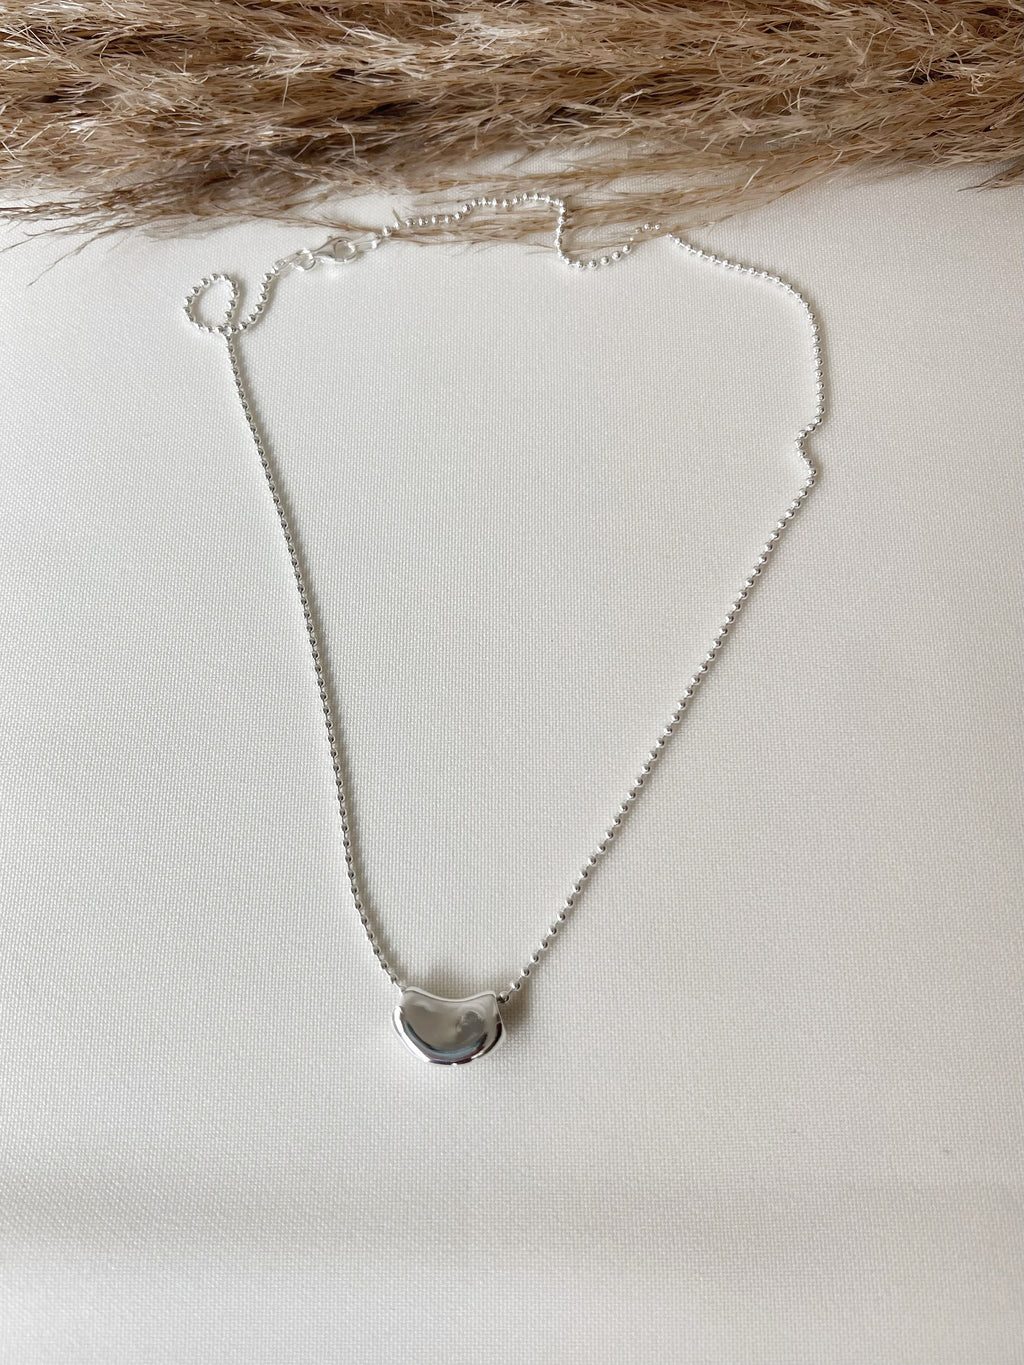 White Bean Necklace